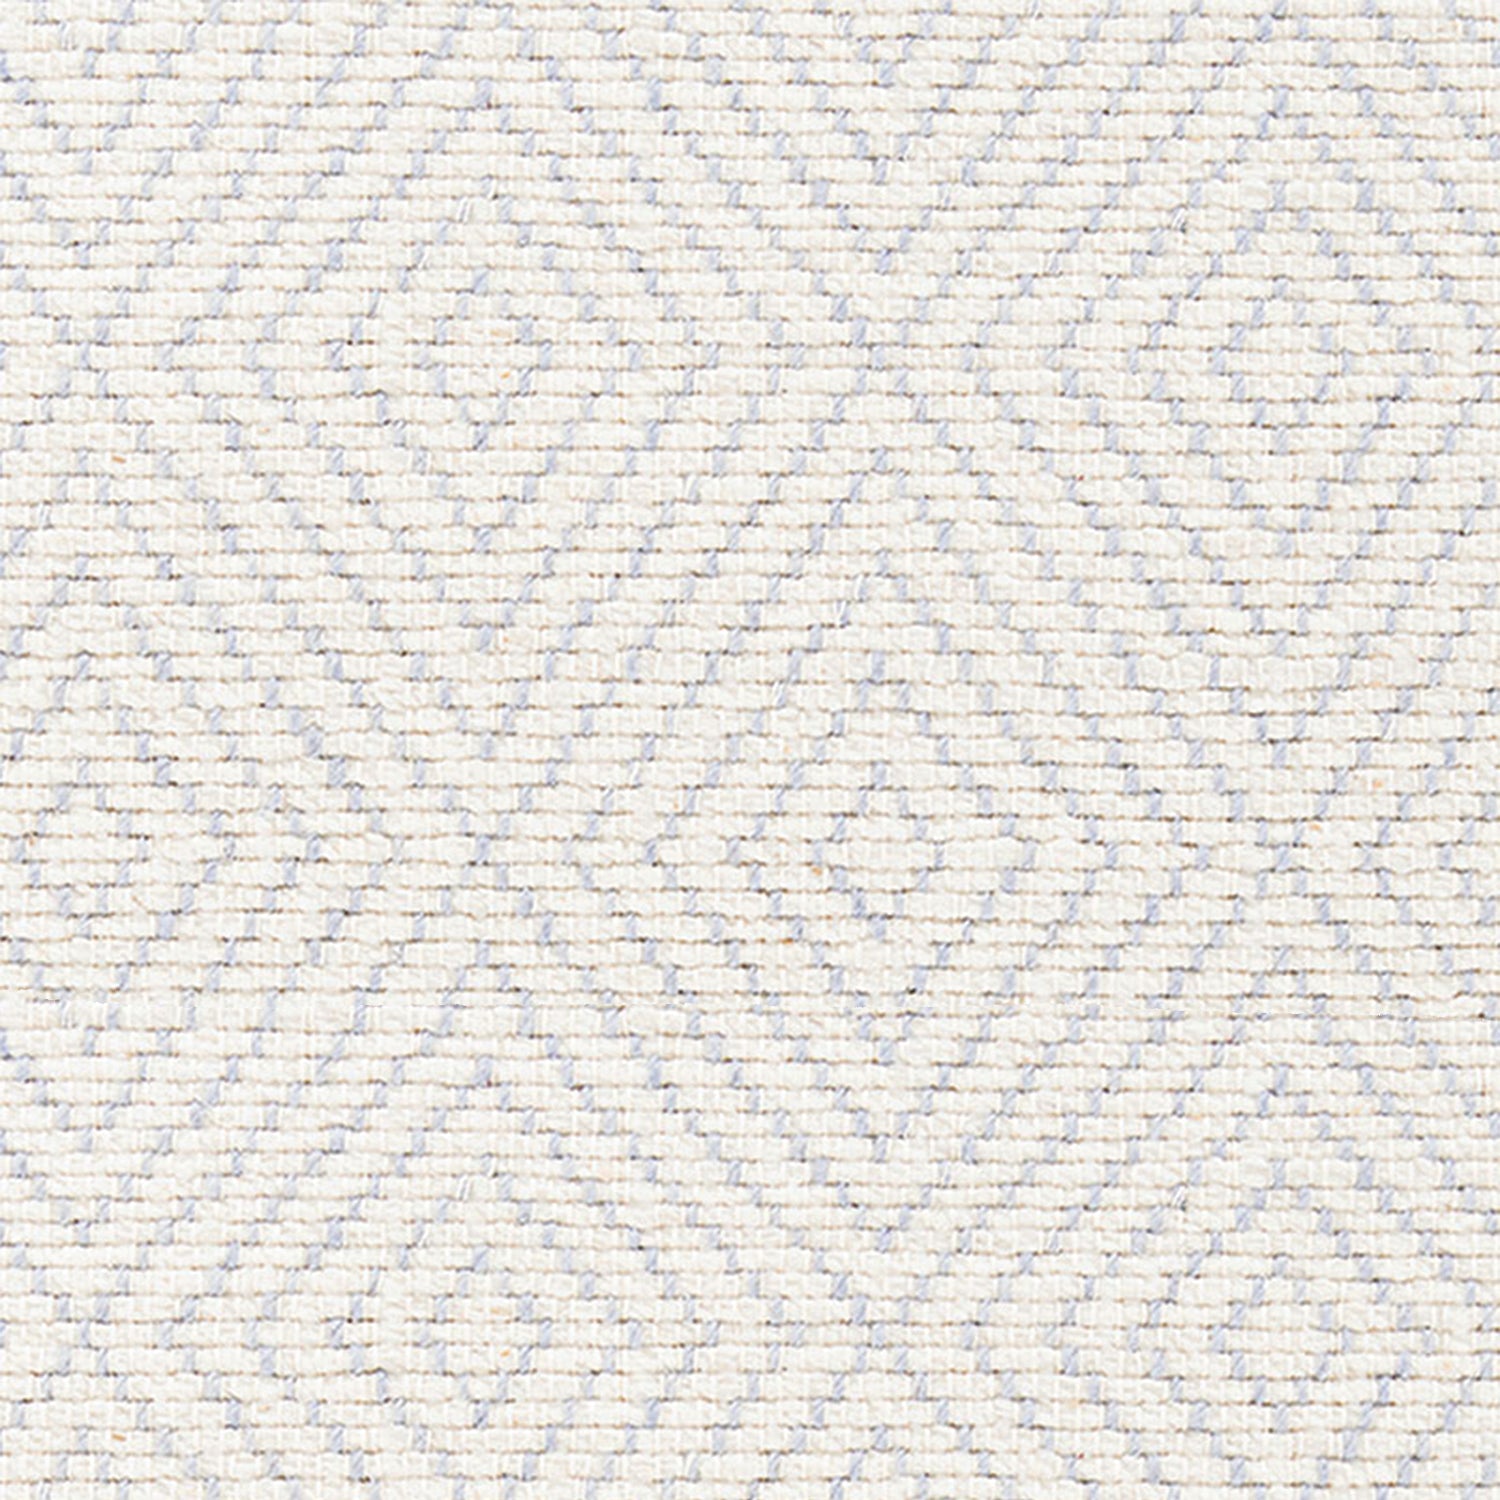 Wool broadloom carpet swatch in a graduated diamond print in light blue on a cream field.